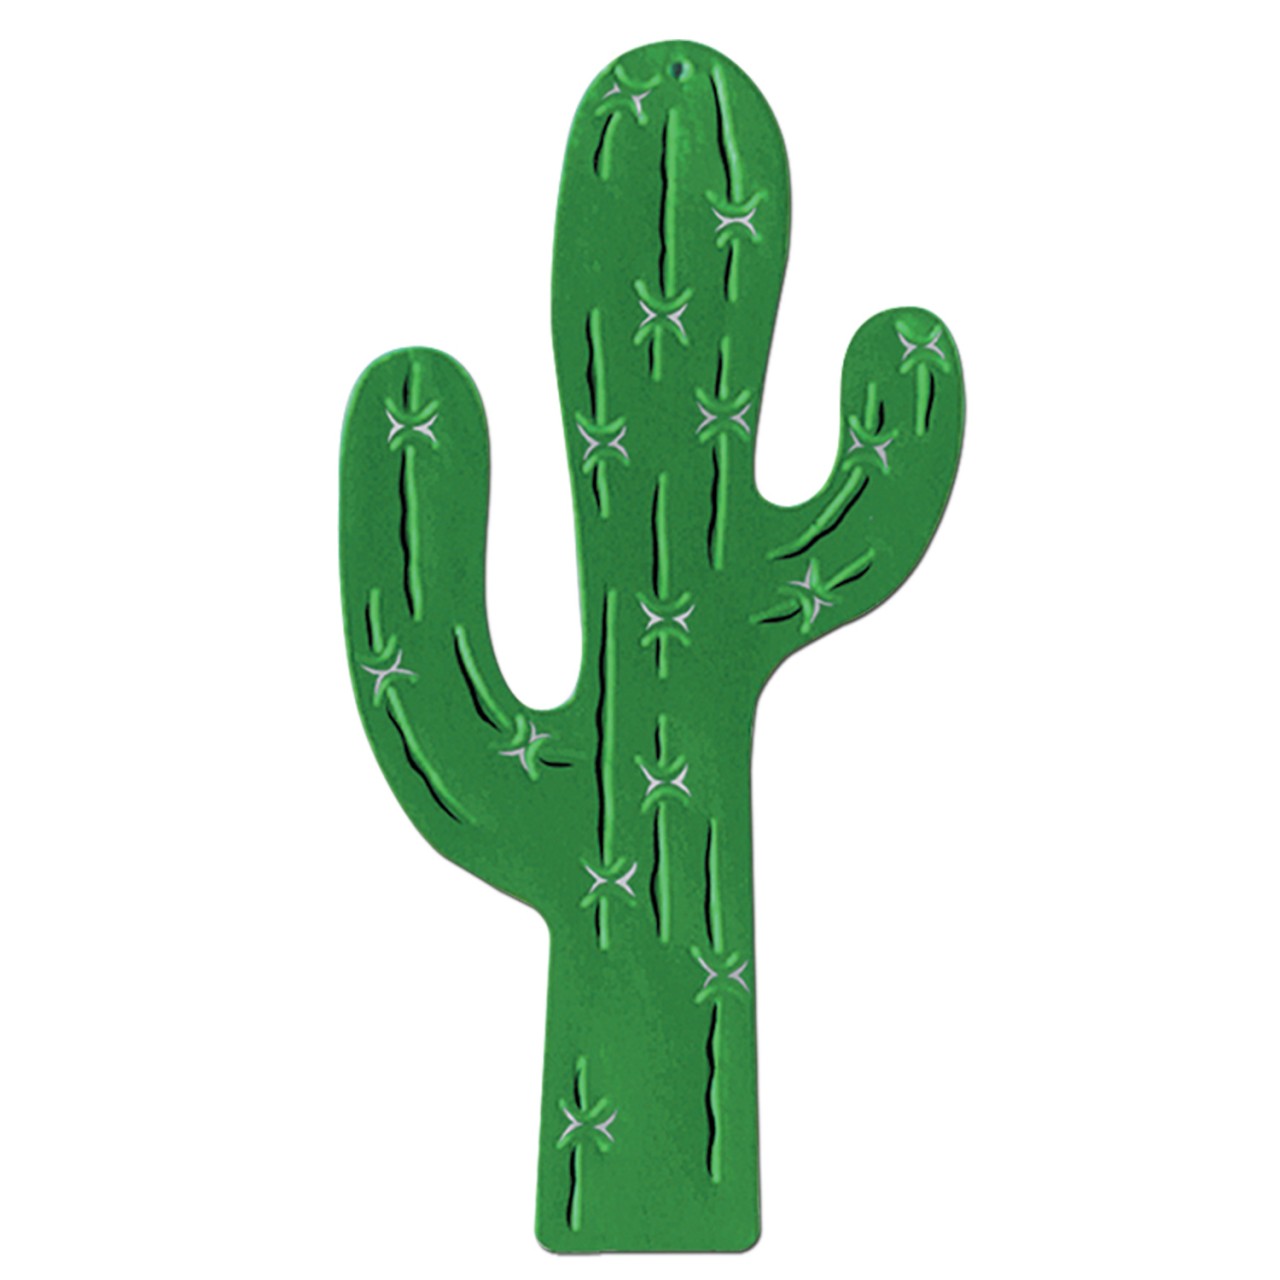 Free cowboy cactus.